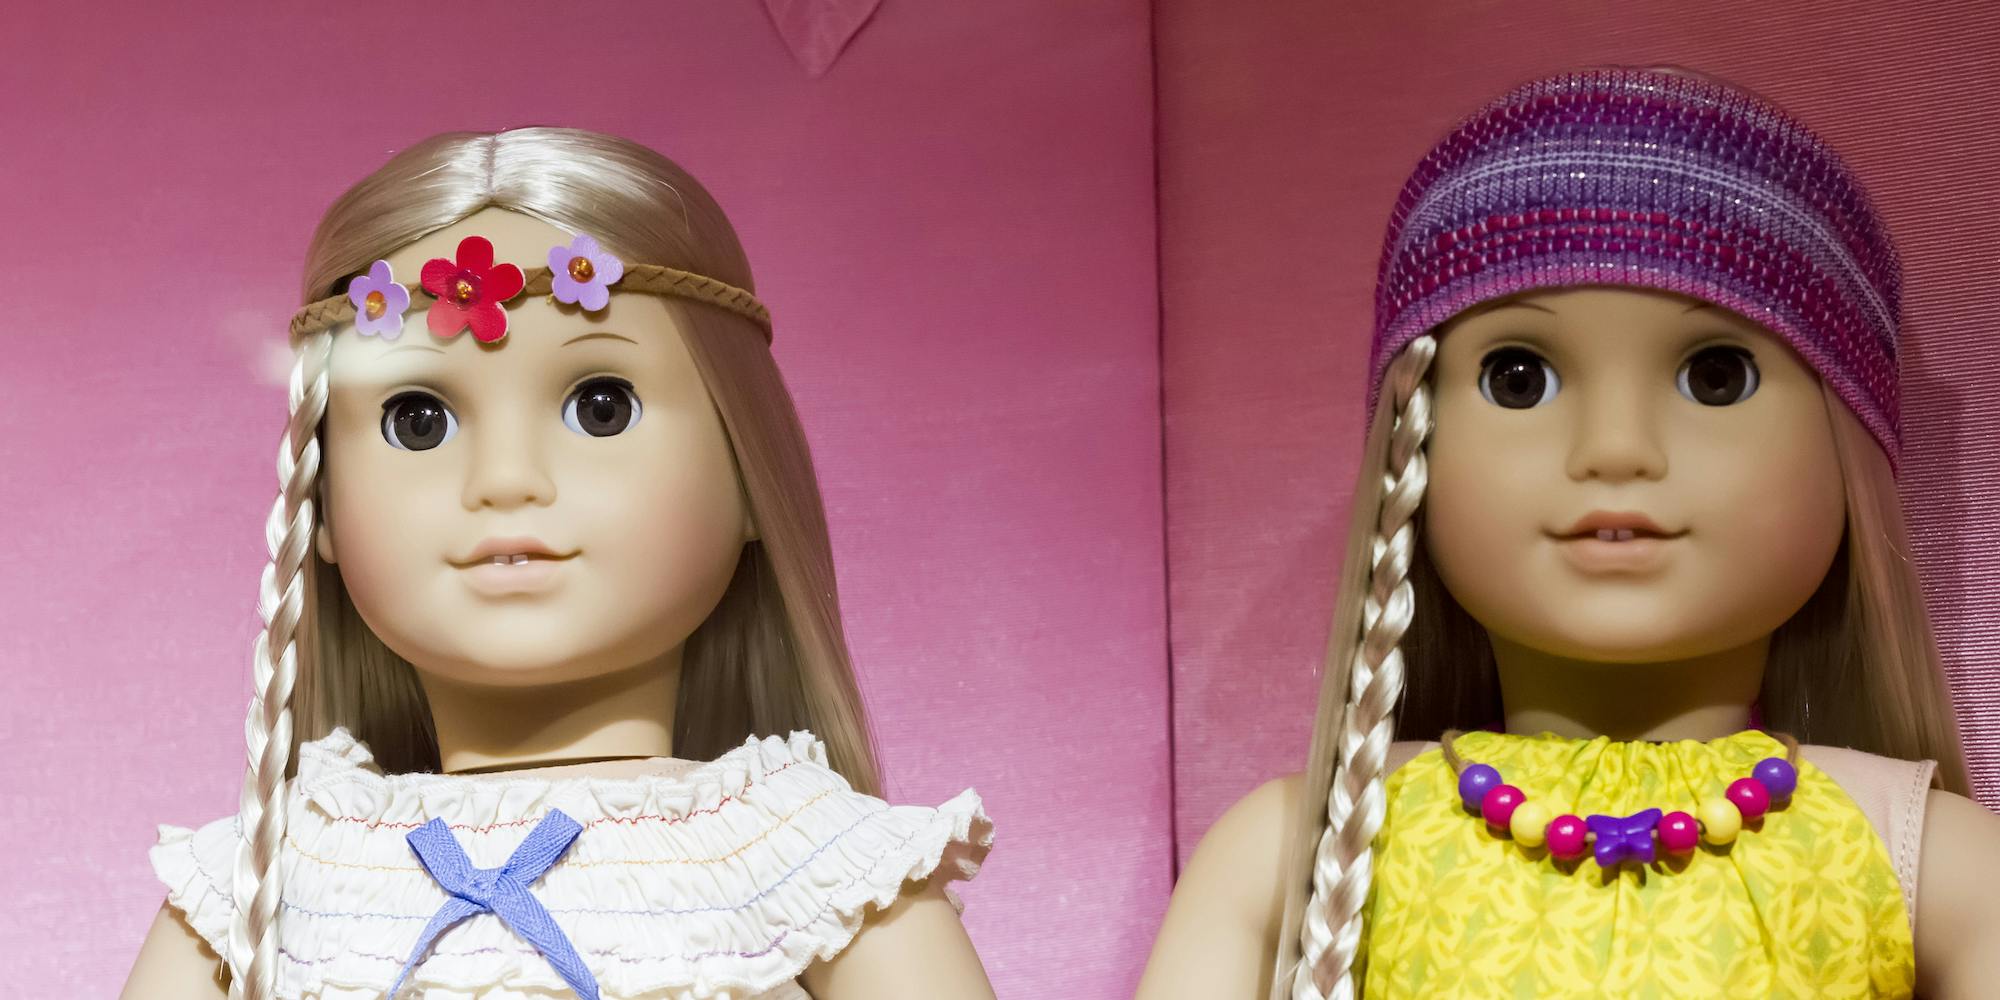 New York City - November 19, 2015: Dolls in The American Girl Place store, in New York City. American Girl Place is a store that sells American Girl dolls.